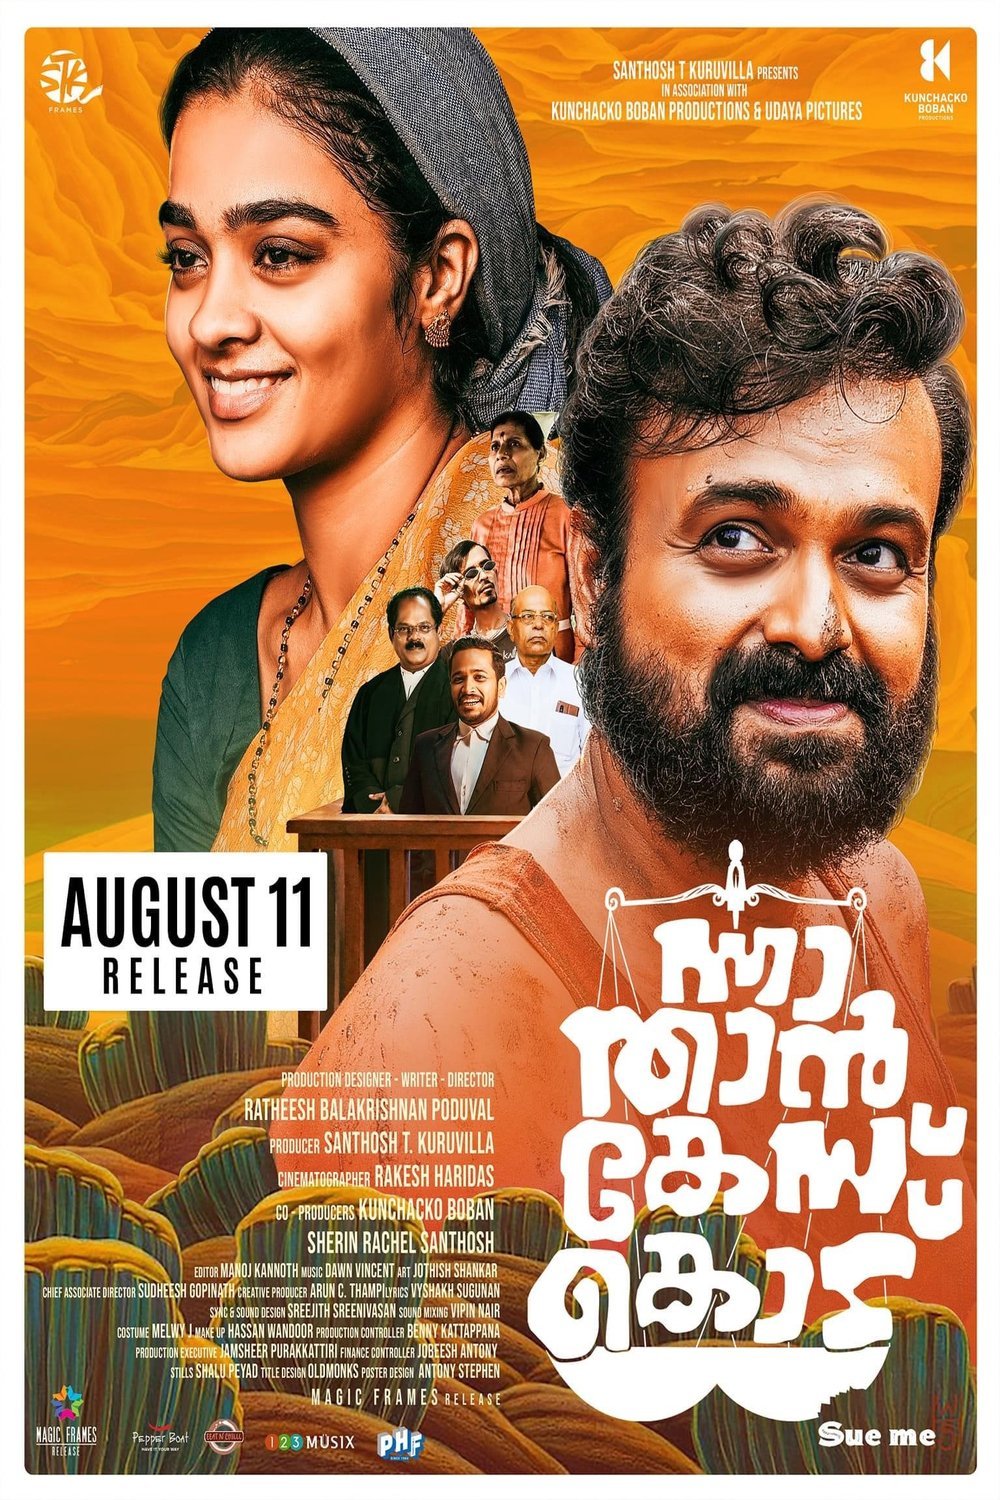 Malayalam poster of the movie Nna Thaan Case Kodu